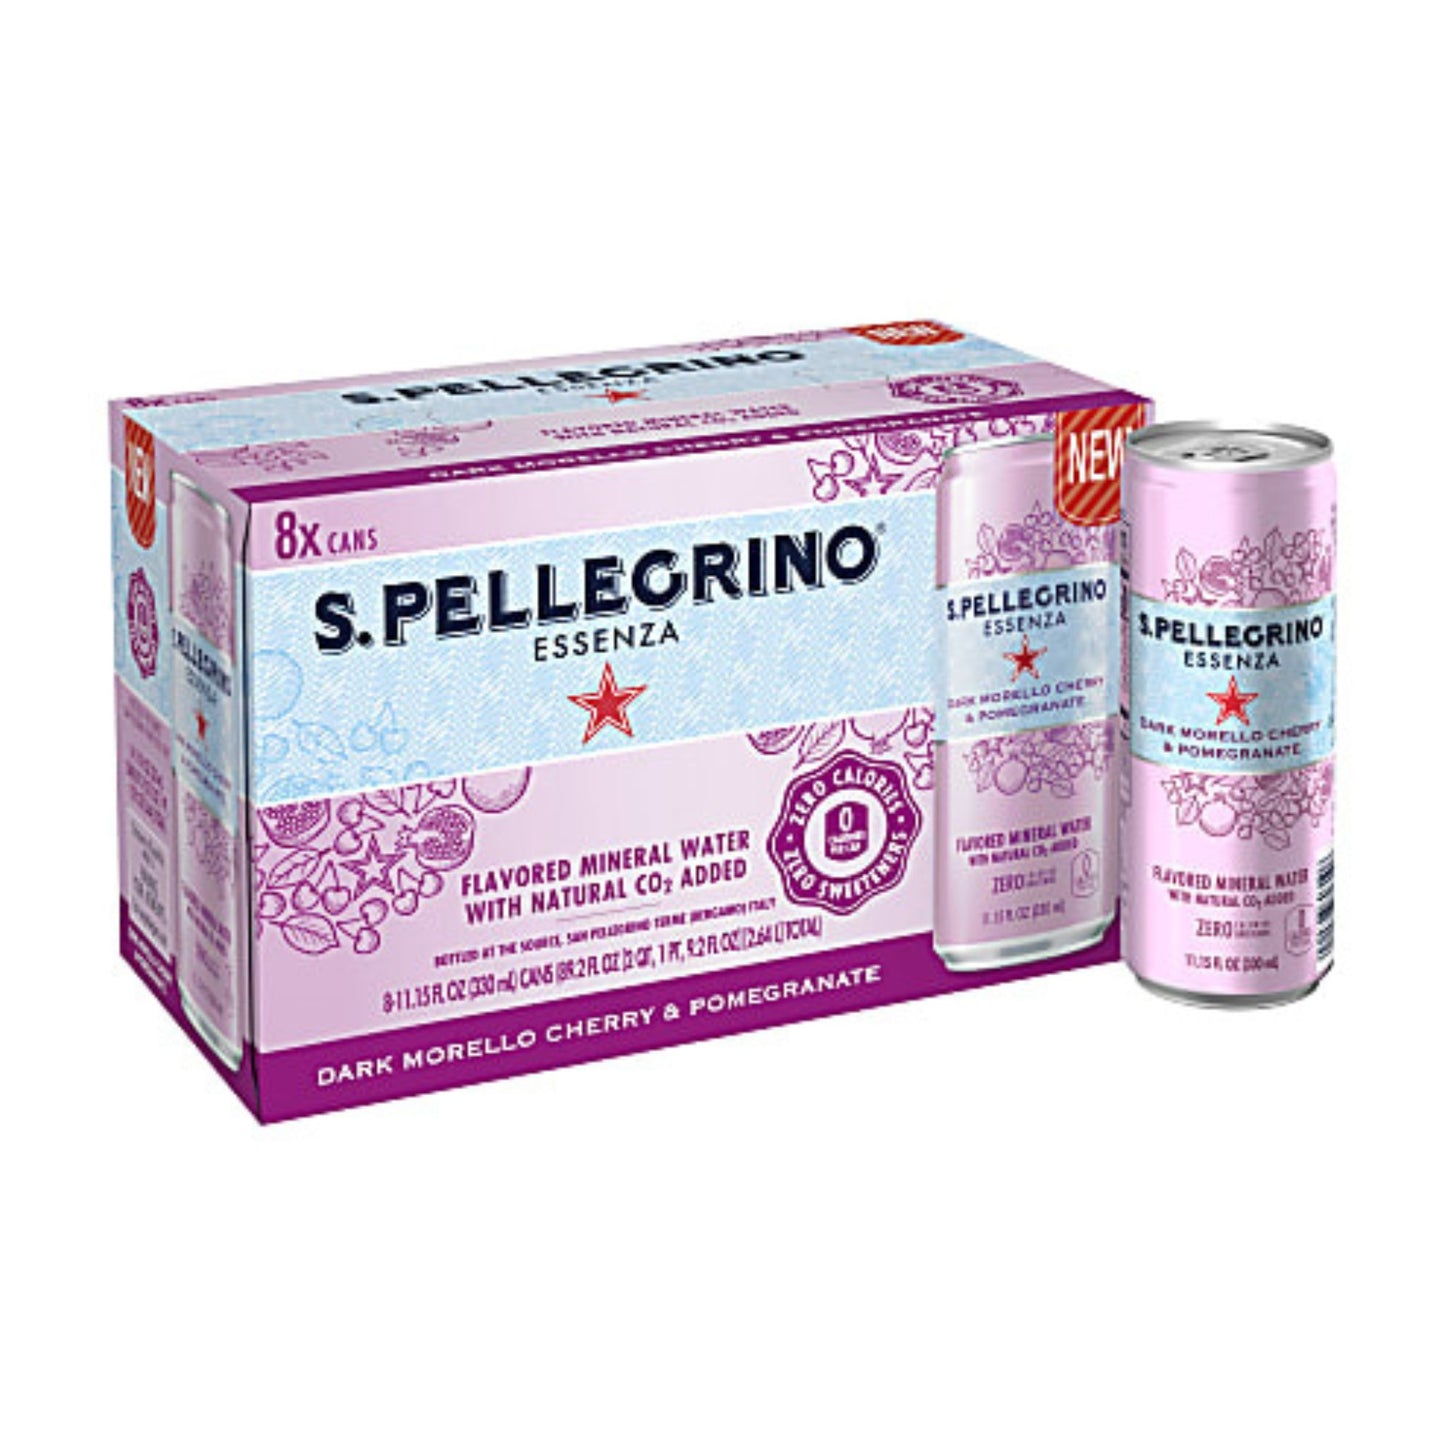 Nestlé S.Pellegrino Essenza Flavored Mineral Water (Dark Morello Cherry & Pomegranate) 11.15 Oz. Pack Of 8 Cans